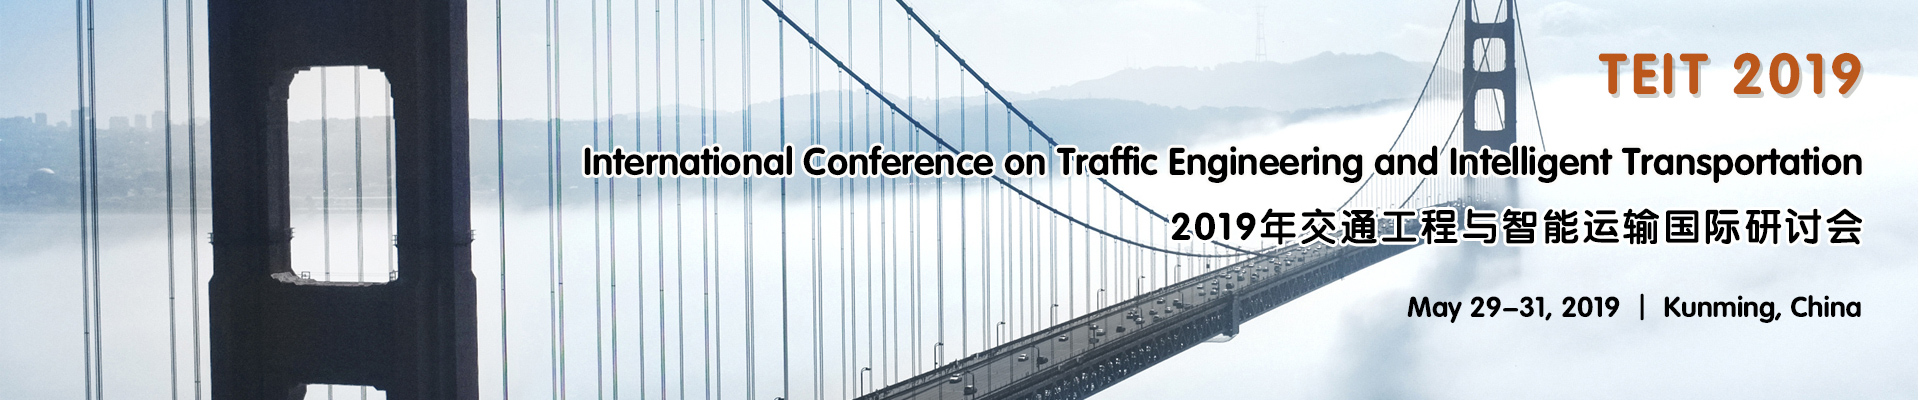 International Conference on Traffic Engineering and Intelligent Transportation (TEIT 2019), Kunming, Yunnan, China